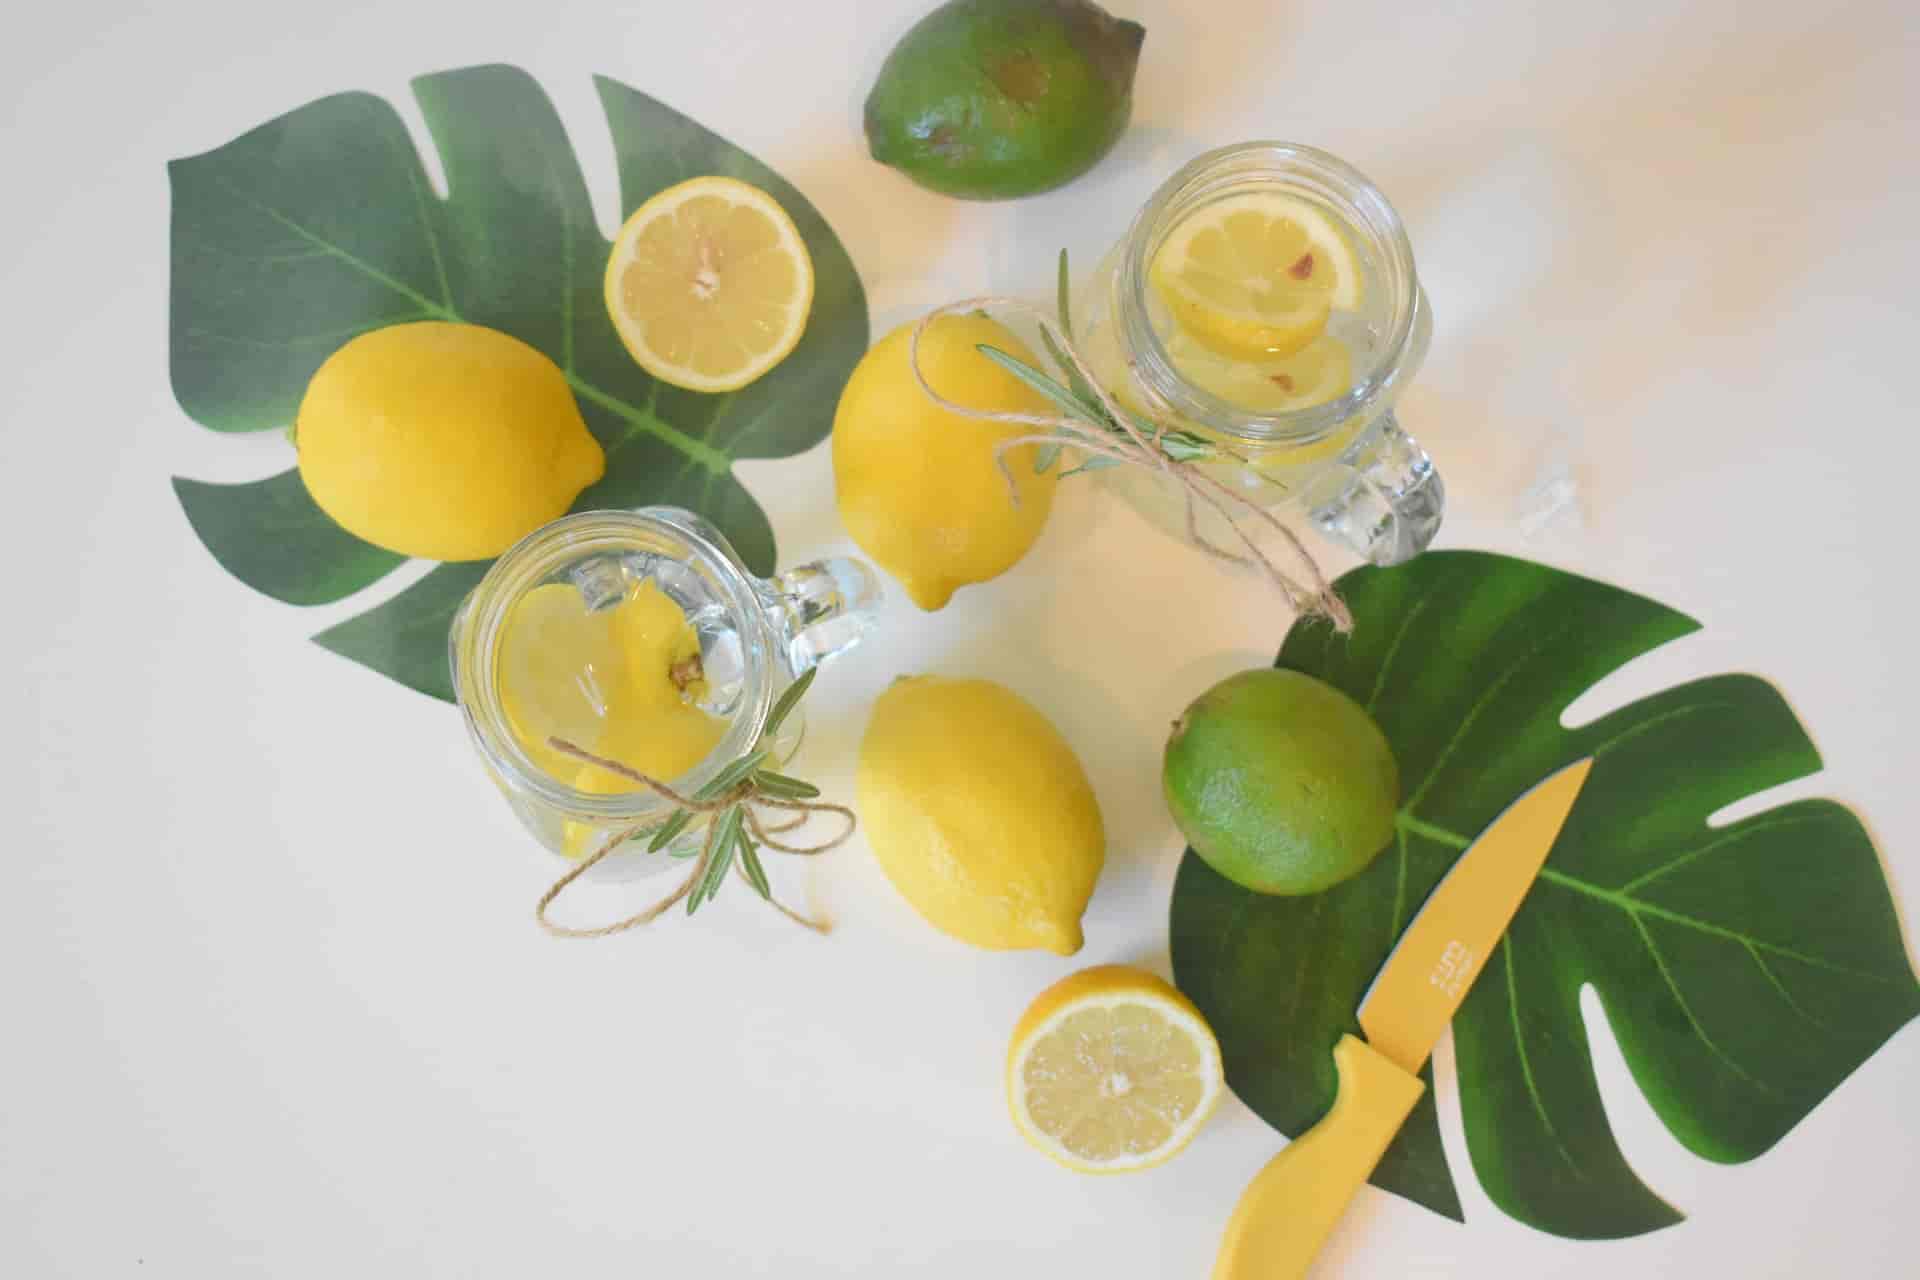 3 Plant That Smells Like Lemon Pledge : [ Our Top Pick ]